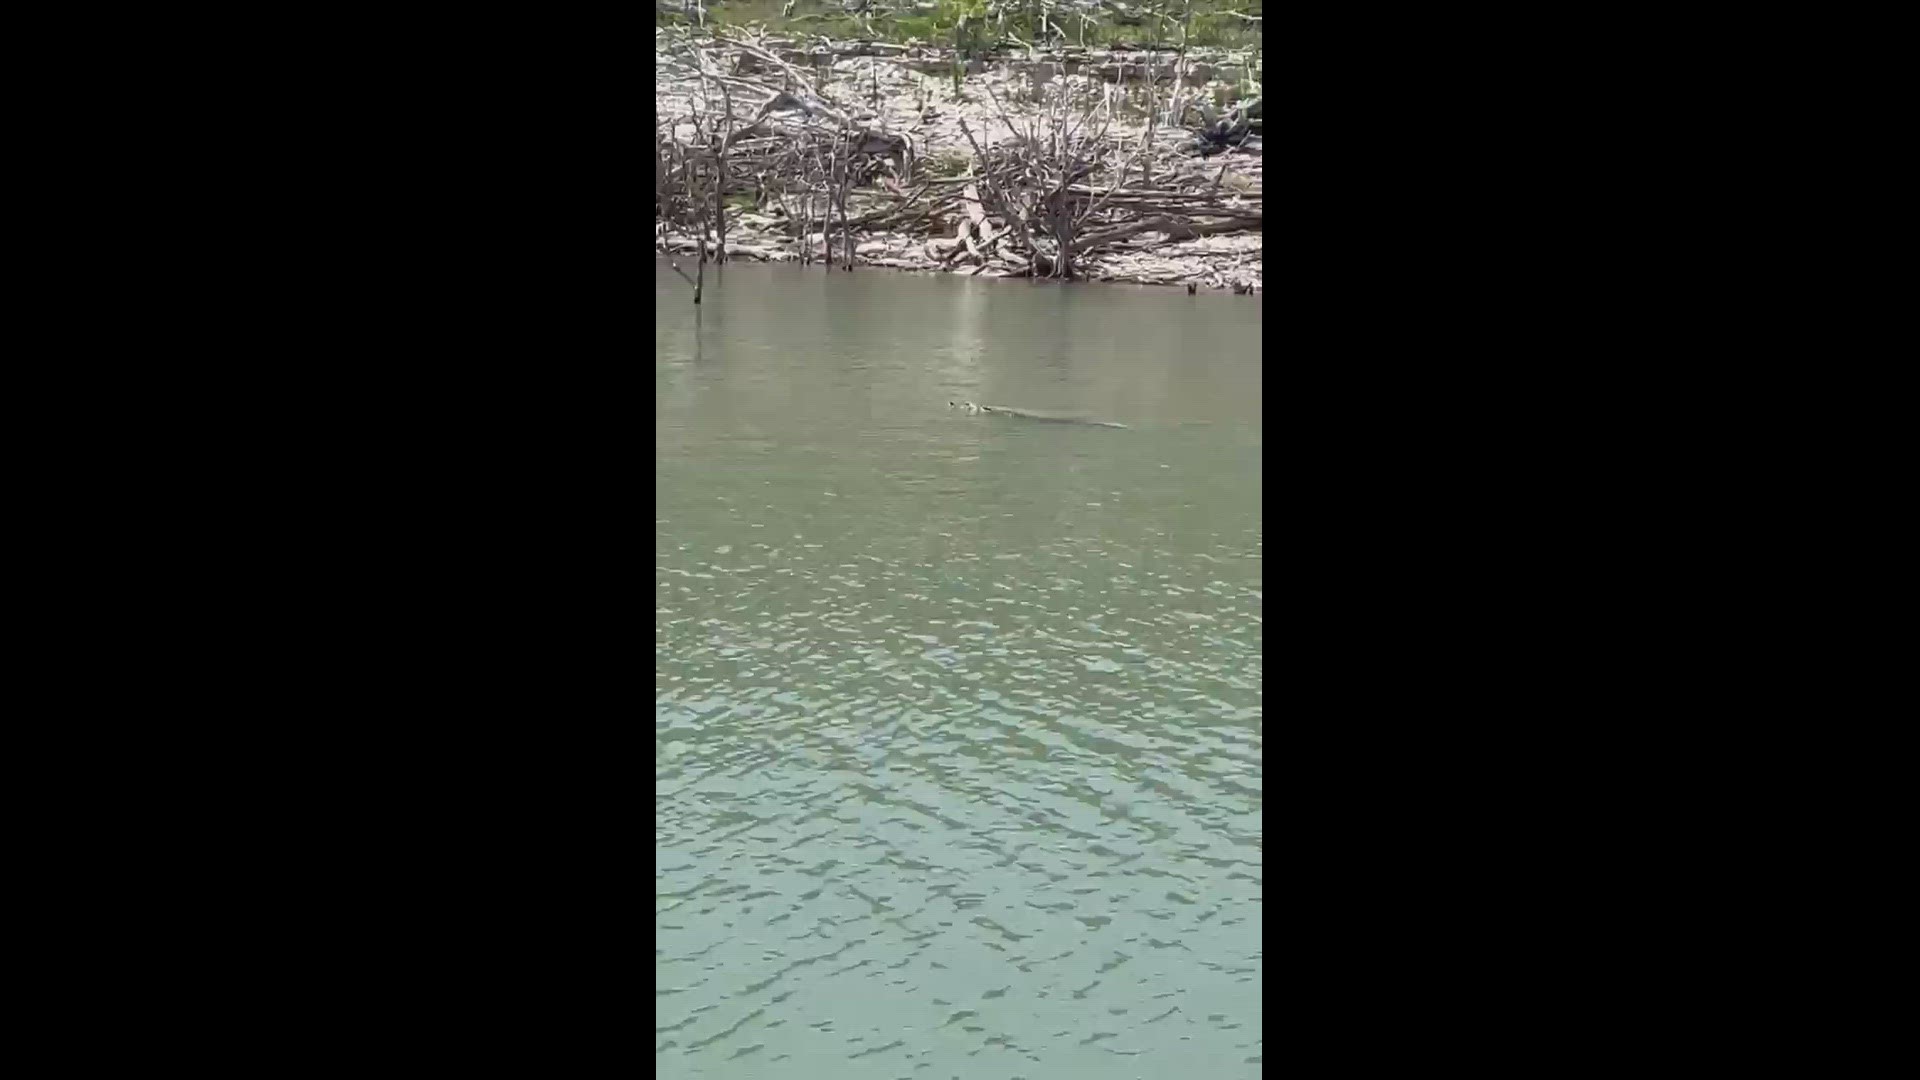 This video captured by Craig Damiano Sr. shows an alligator swimming in Stillhouse Hollow Lake near Cedar Gap Park.